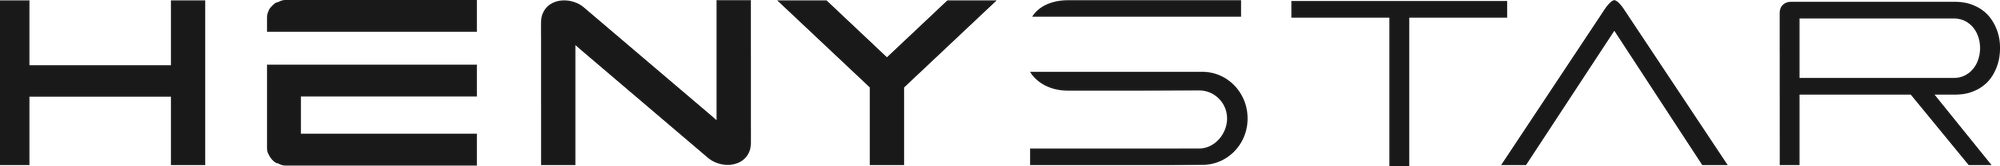 Heny Star logo